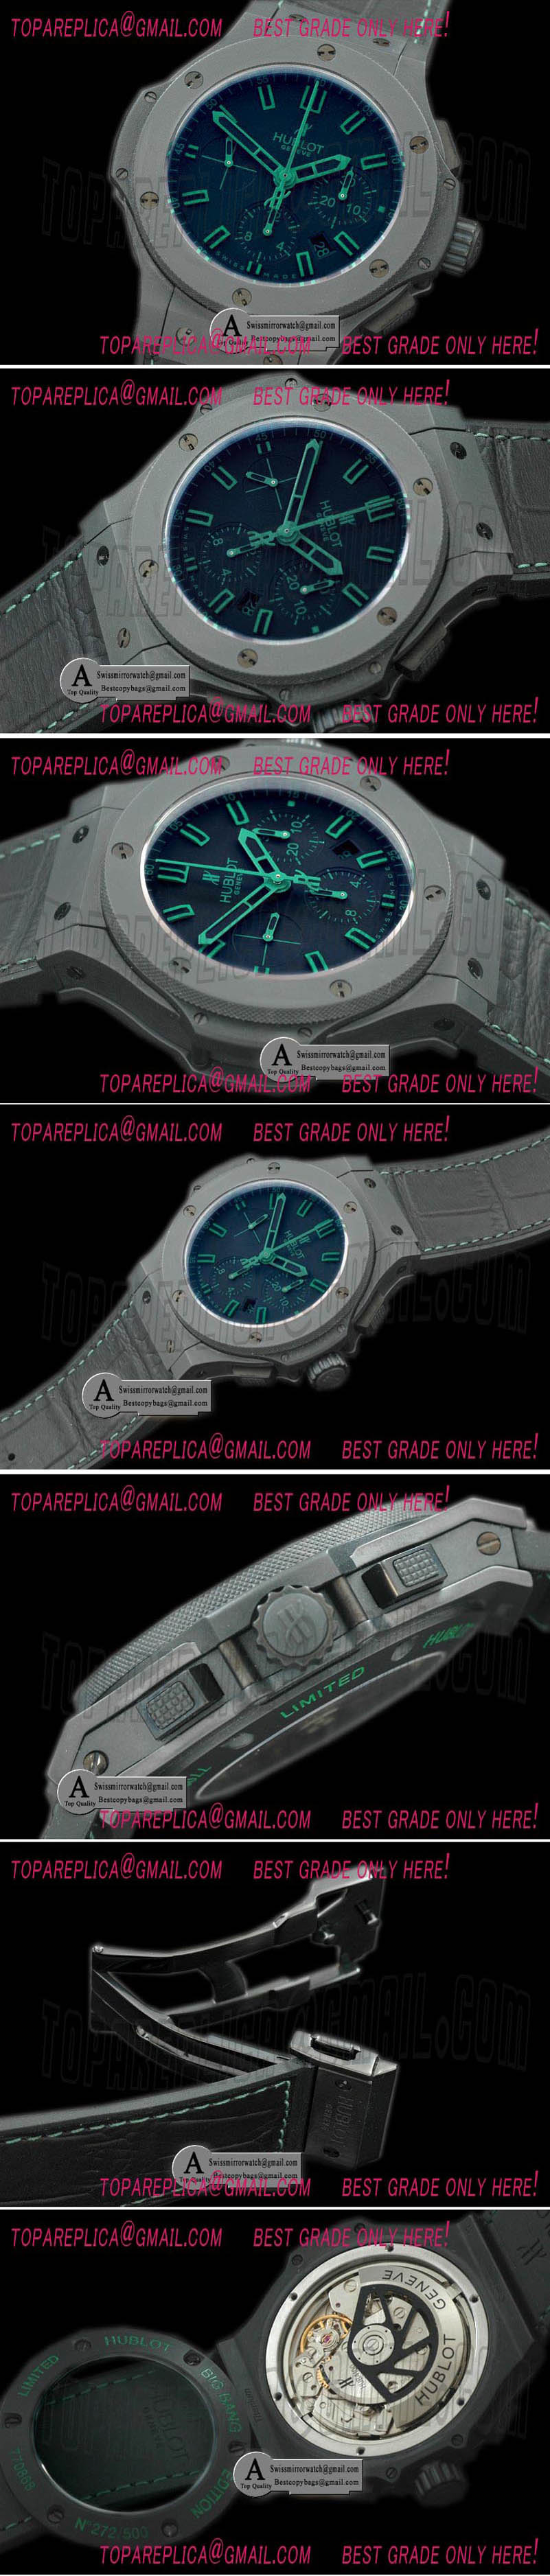 Hublot 301.CI.1190.GR.ABG11 Big Bang Green Magic Ceramic/Ceramic Black A-7750 Replica Watches